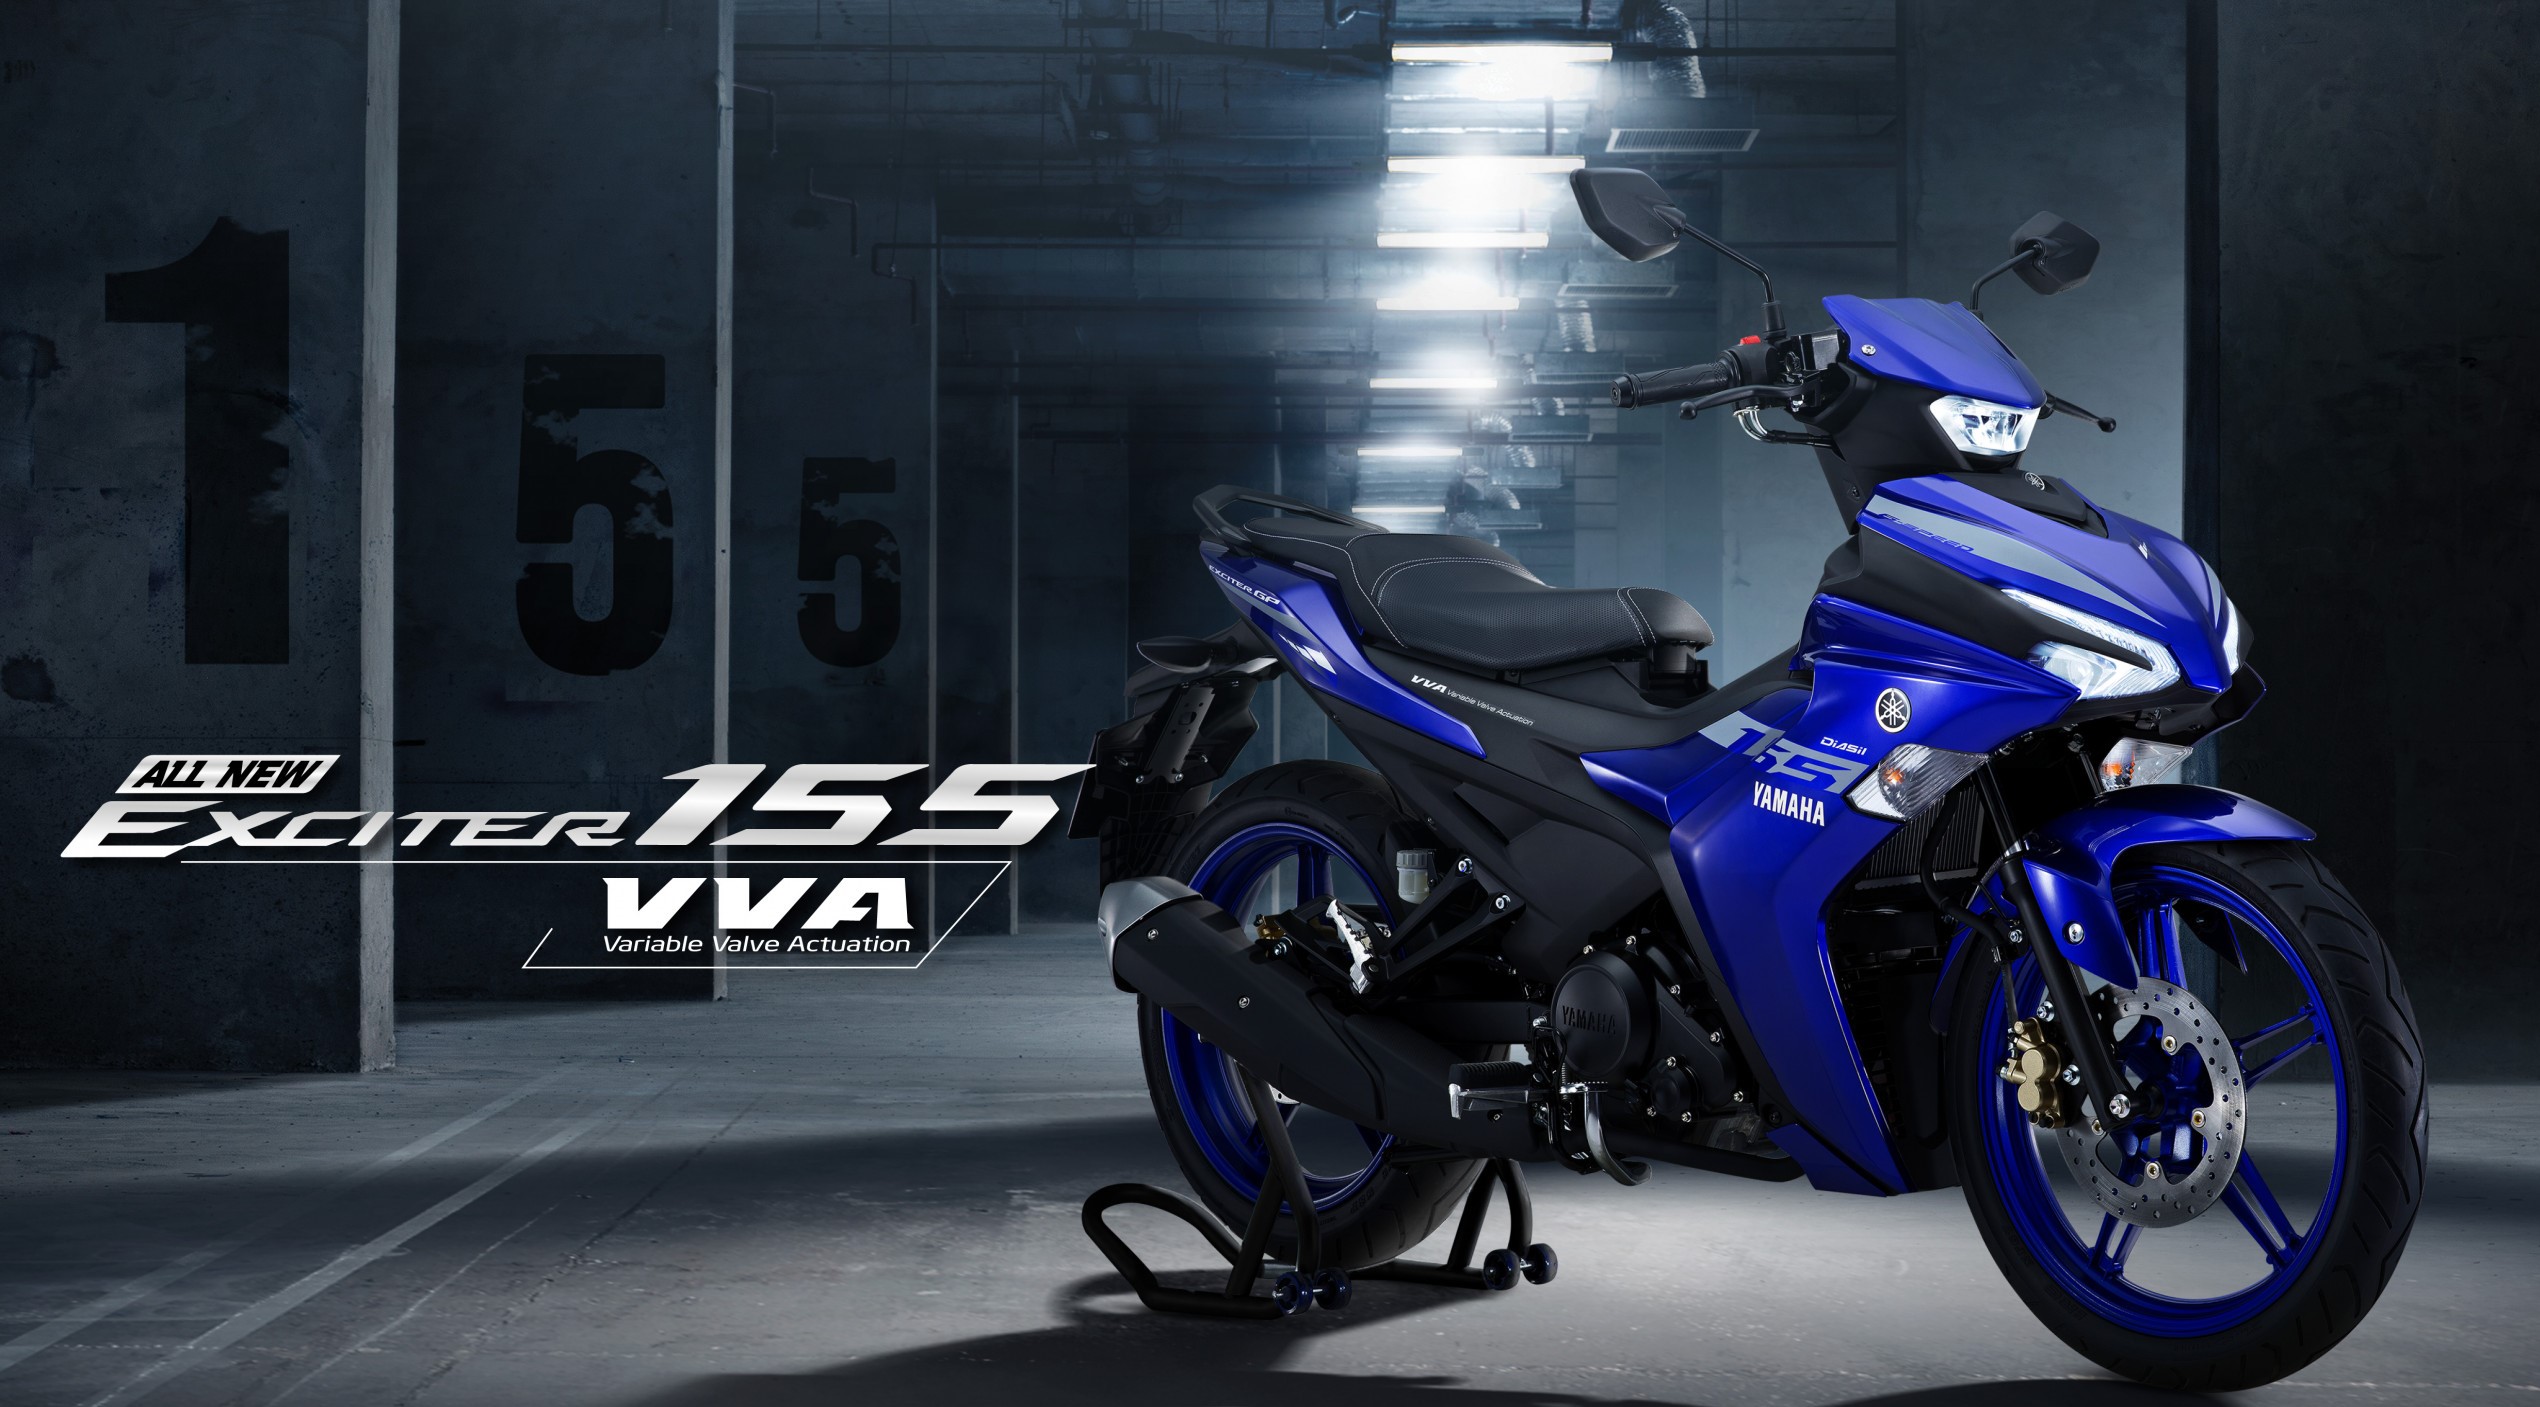 Mua trả góp xe máy Yamaha Exciter 155 VVA lãi suất thấp